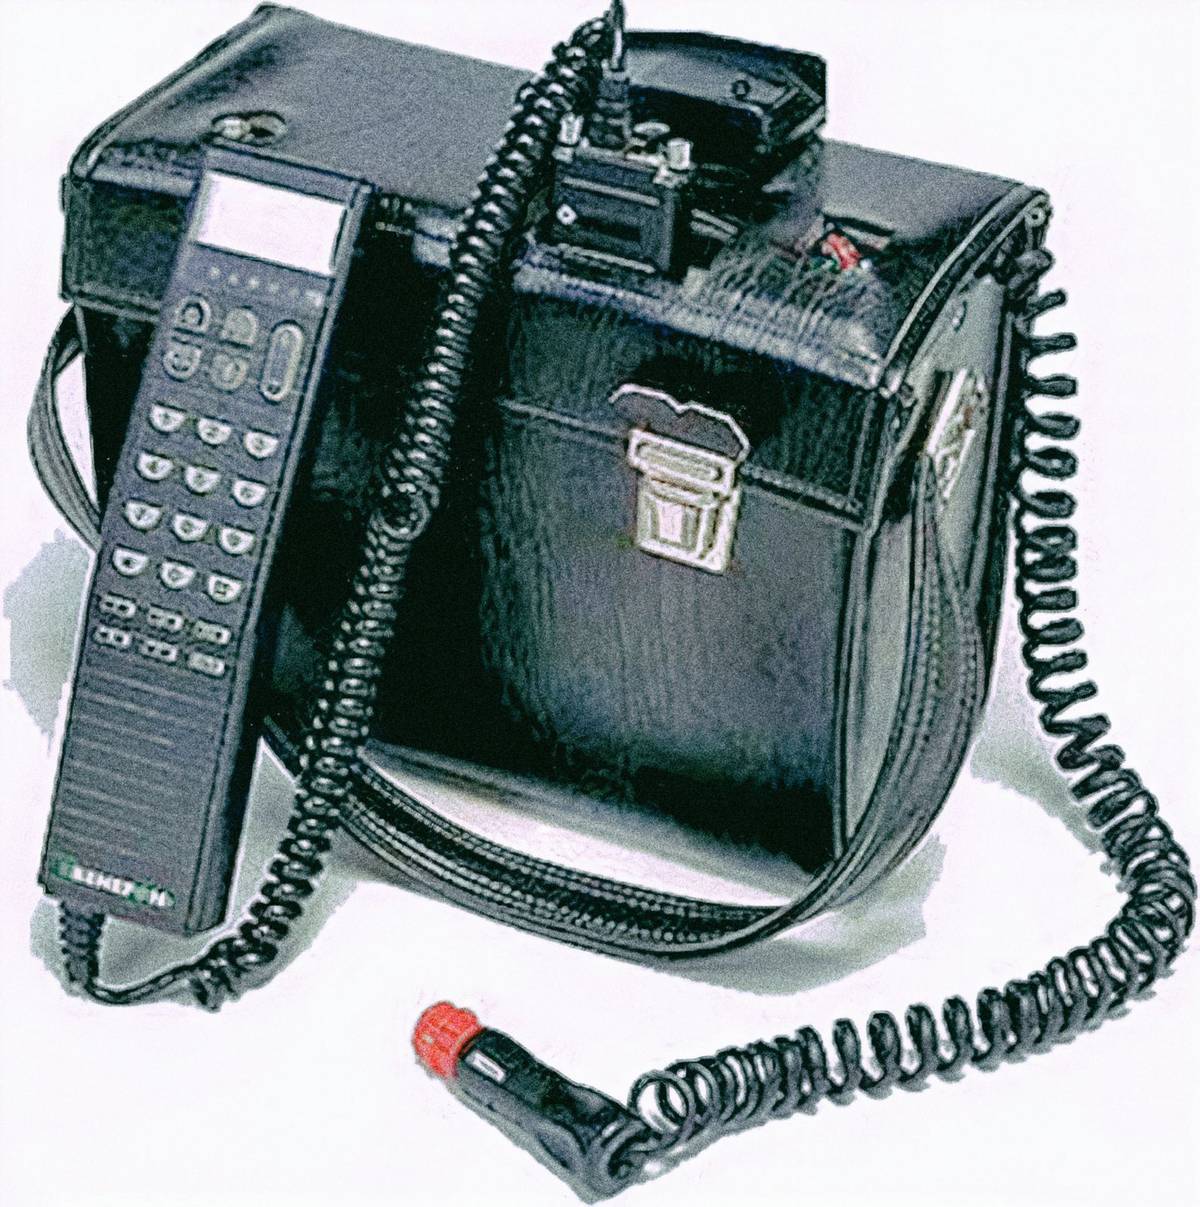 Nokia Mobira Senator (1982)